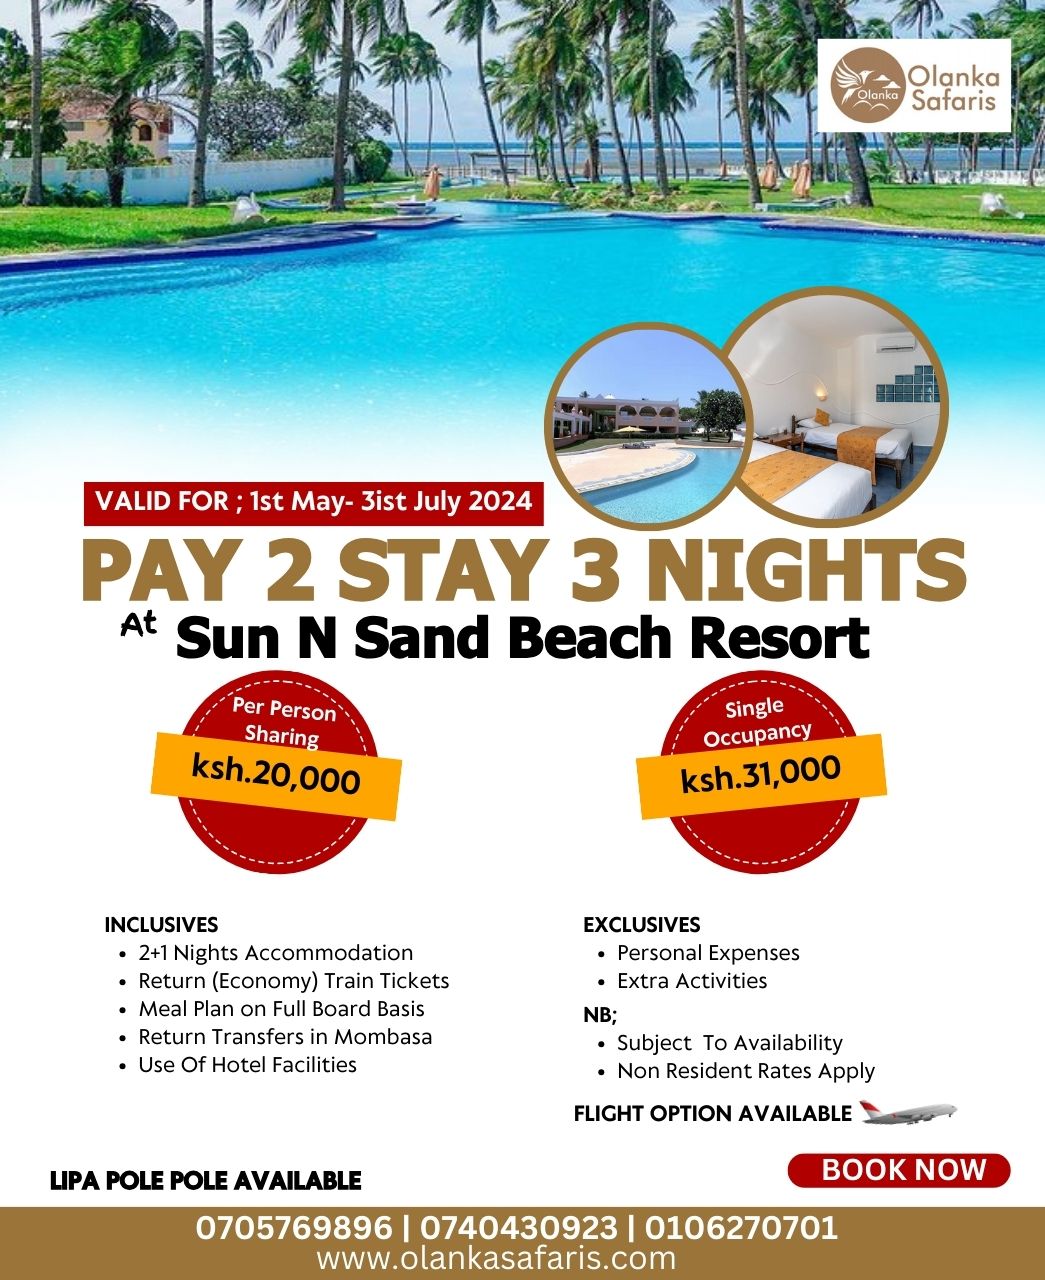 Free night offer at Sun N Sand Beach Resort